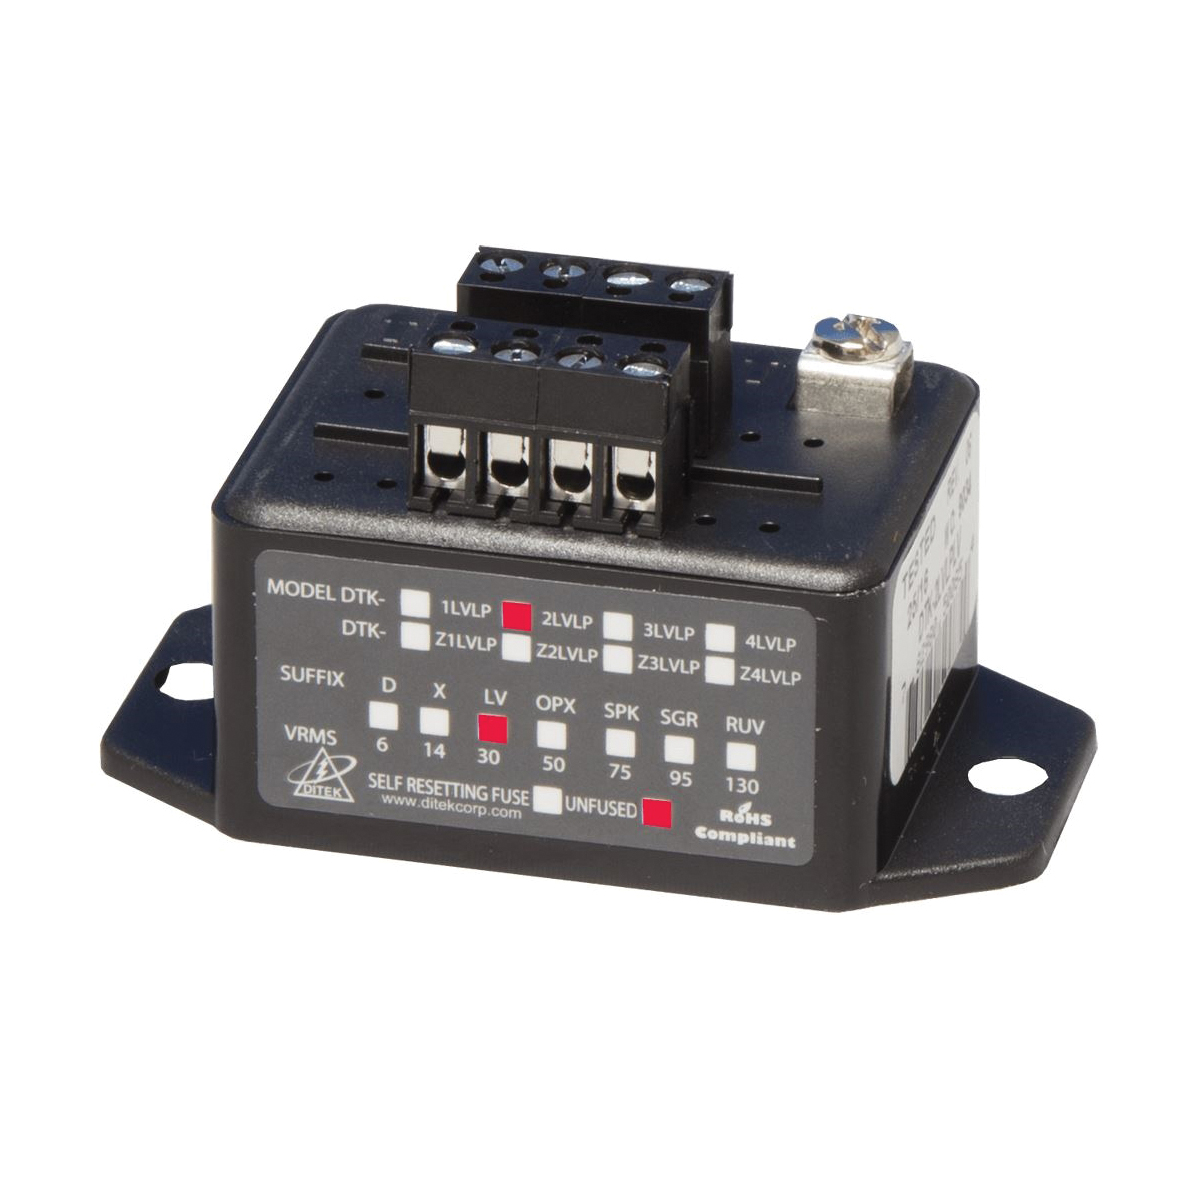 DITEK® DTK-2LVLPLV Low-Voltage Surge Protector, 24 V, 5 A, 2000 A Short Circuit